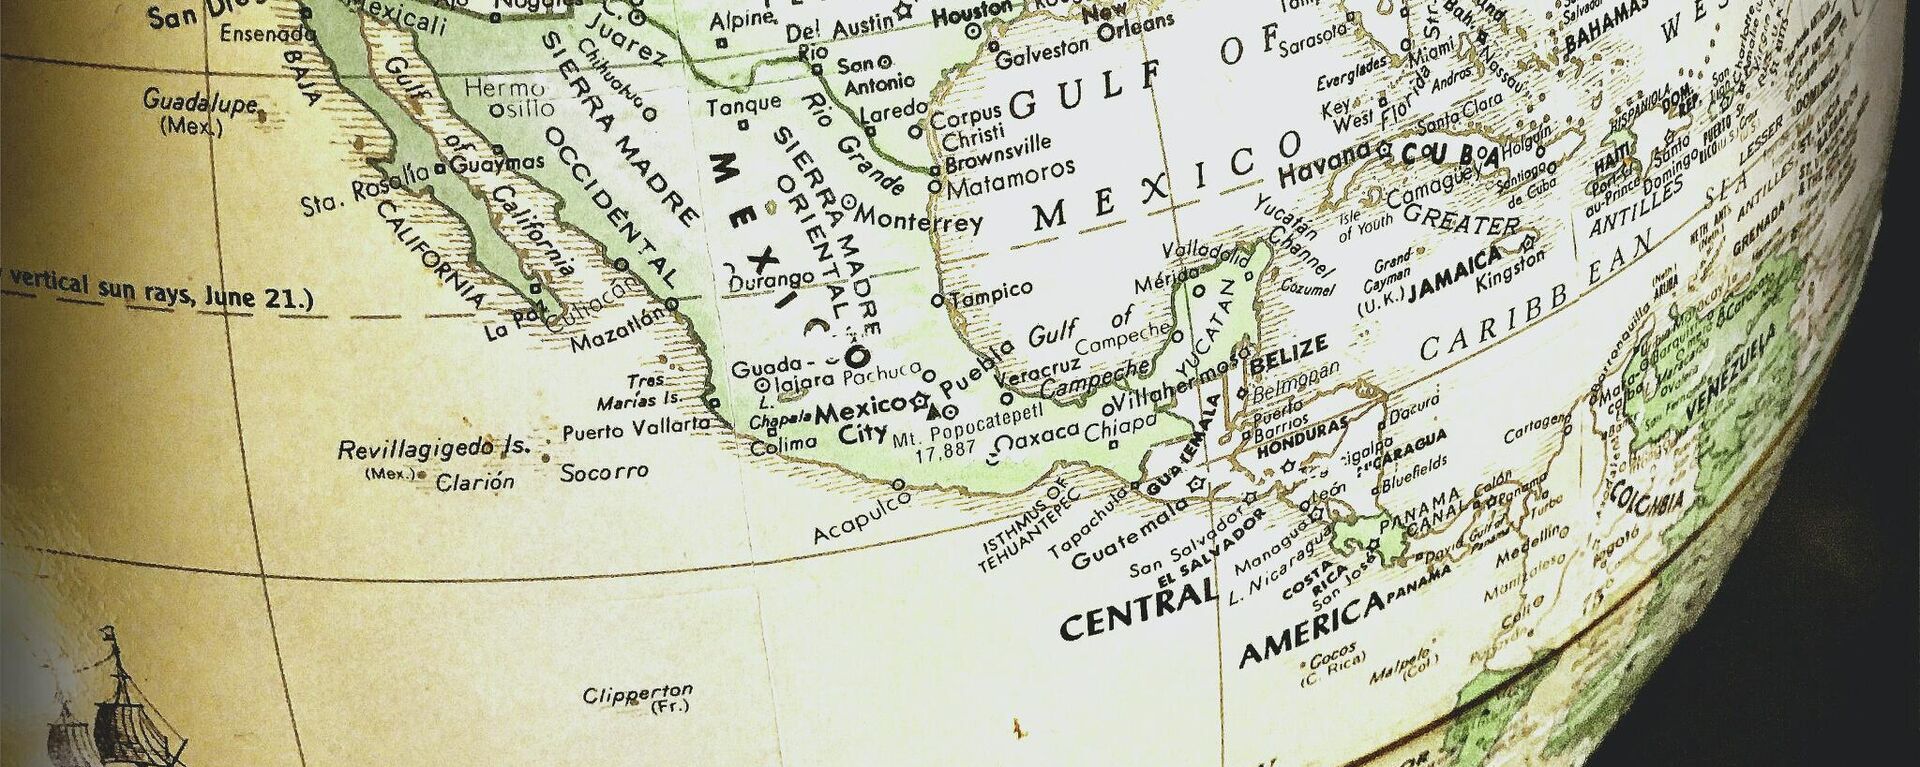 Mapa de Centroamérica - Sputnik Mundo, 1920, 22.11.2021